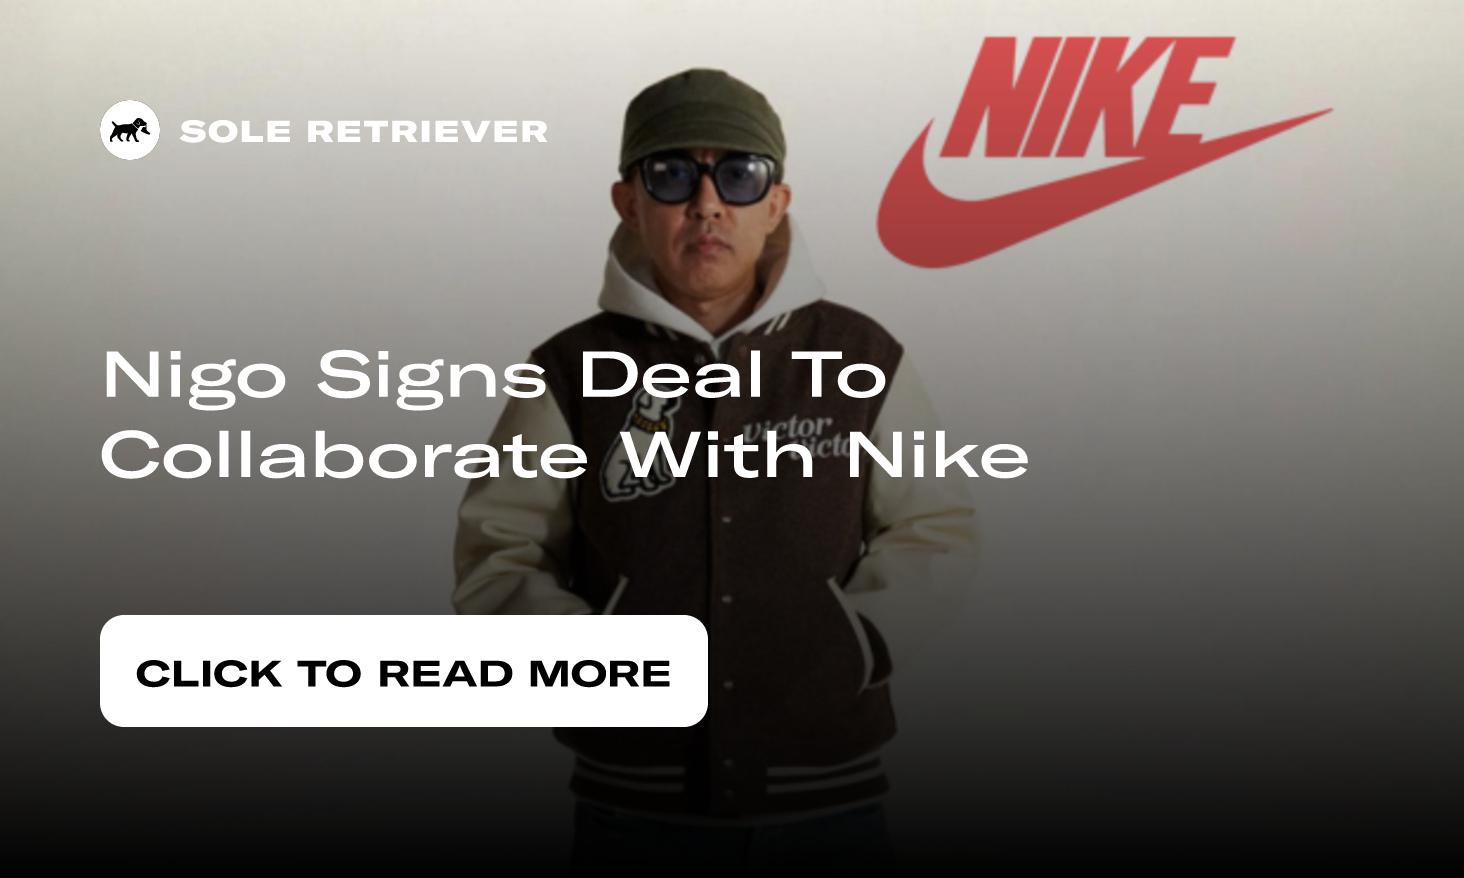 Nigo x Nike Deal Signed, Collaboration Coming